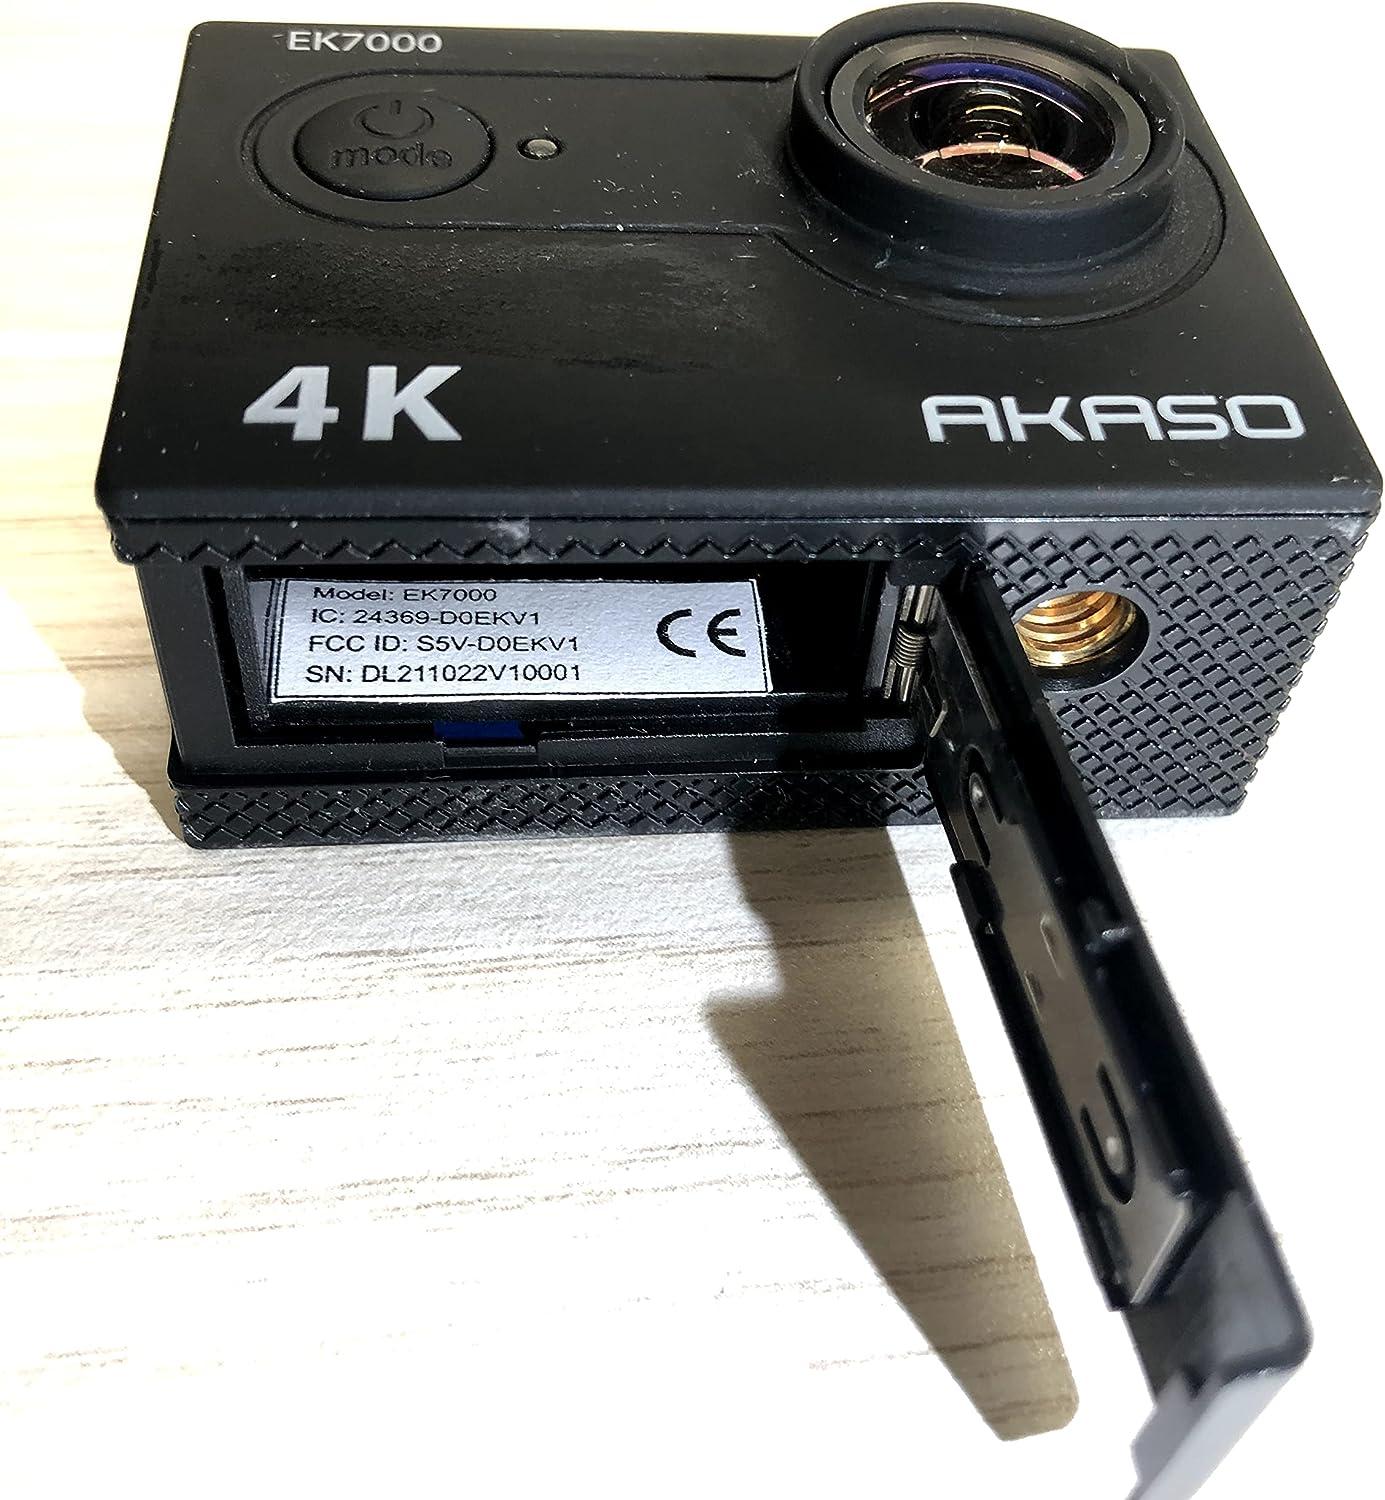 Go AKASO EK7000 Pro Action Camera Ultra HD 4K WiFi 1080P/60fps 2.0